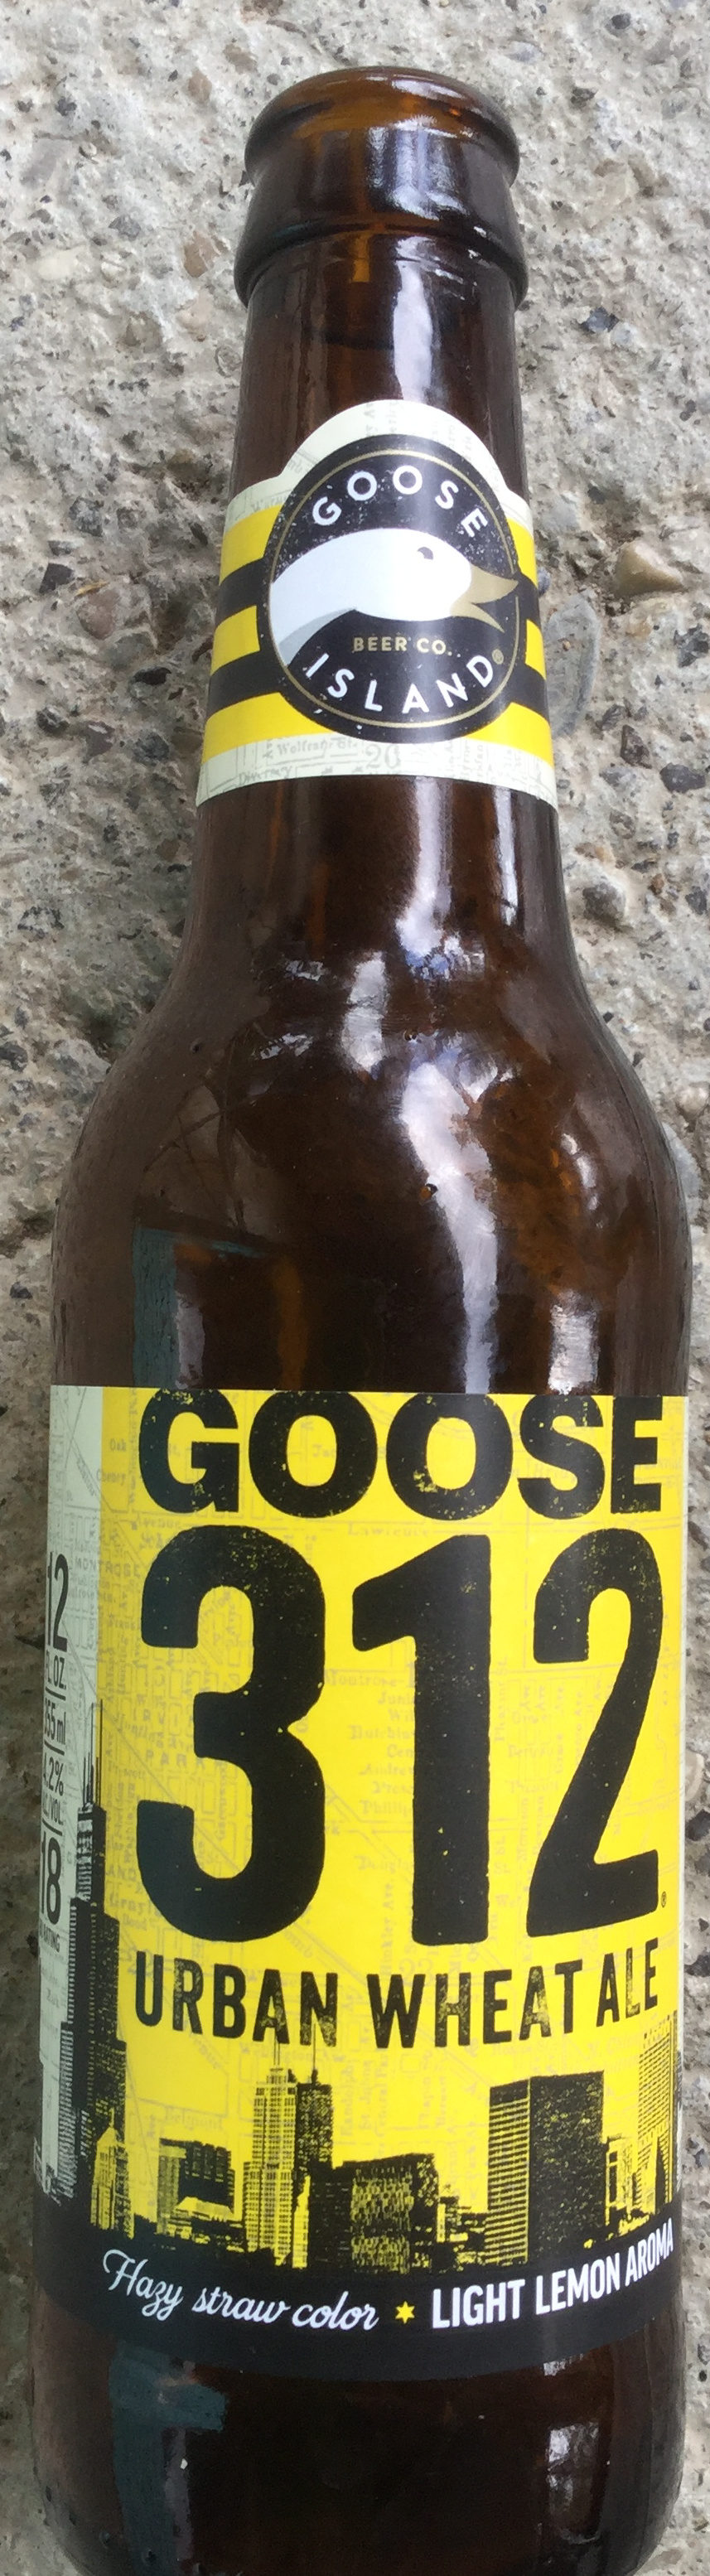 Goose 312 - Produit